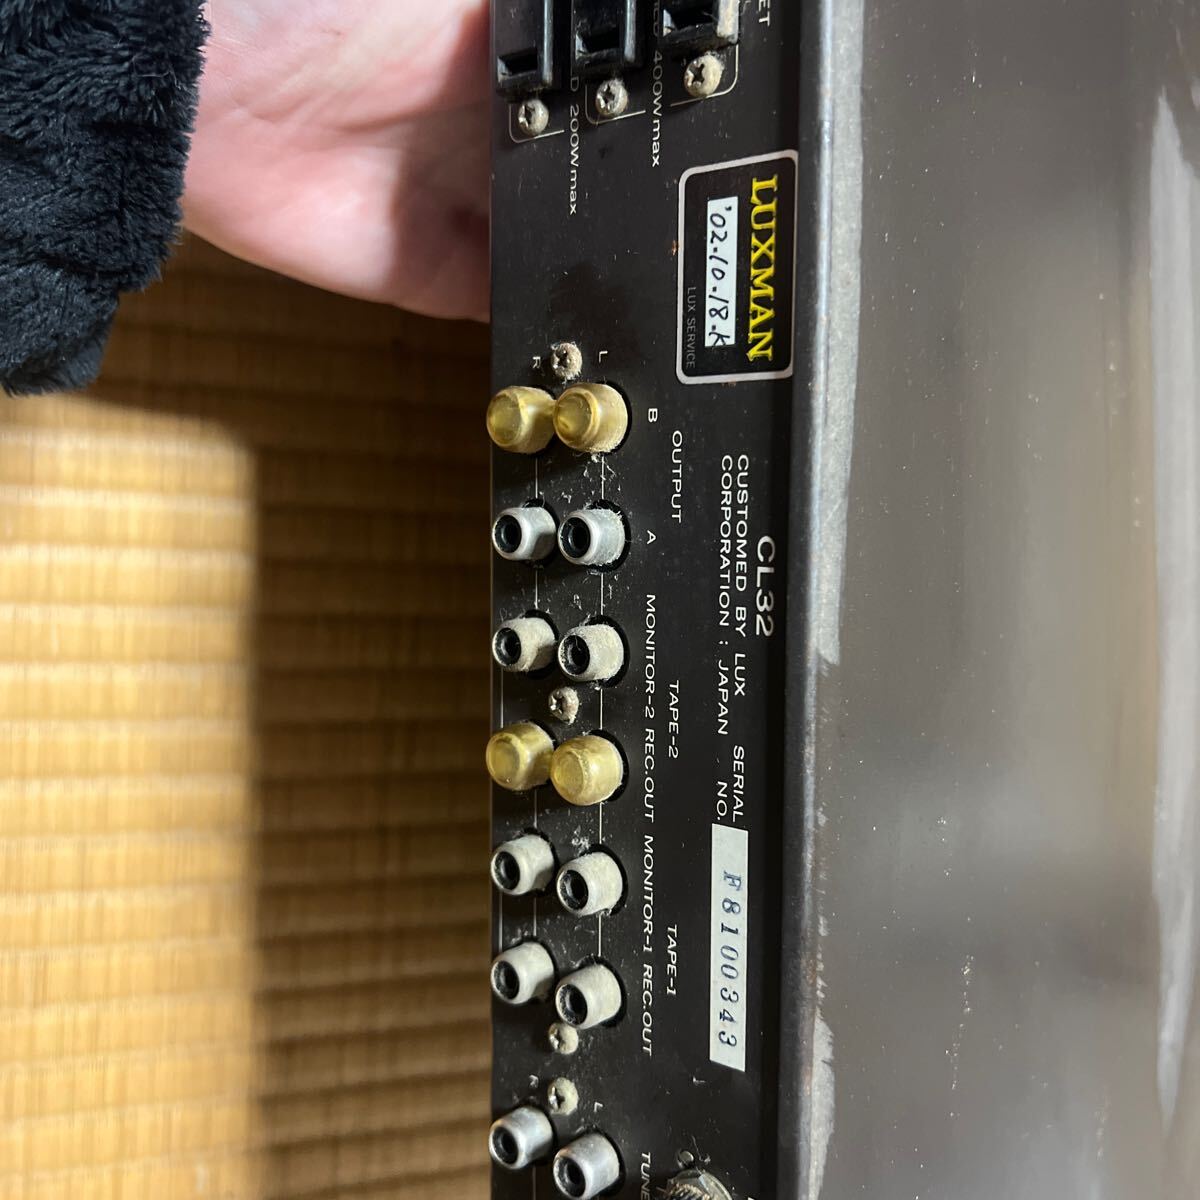  Luxman CL32 pre-amplifier junk treatment 